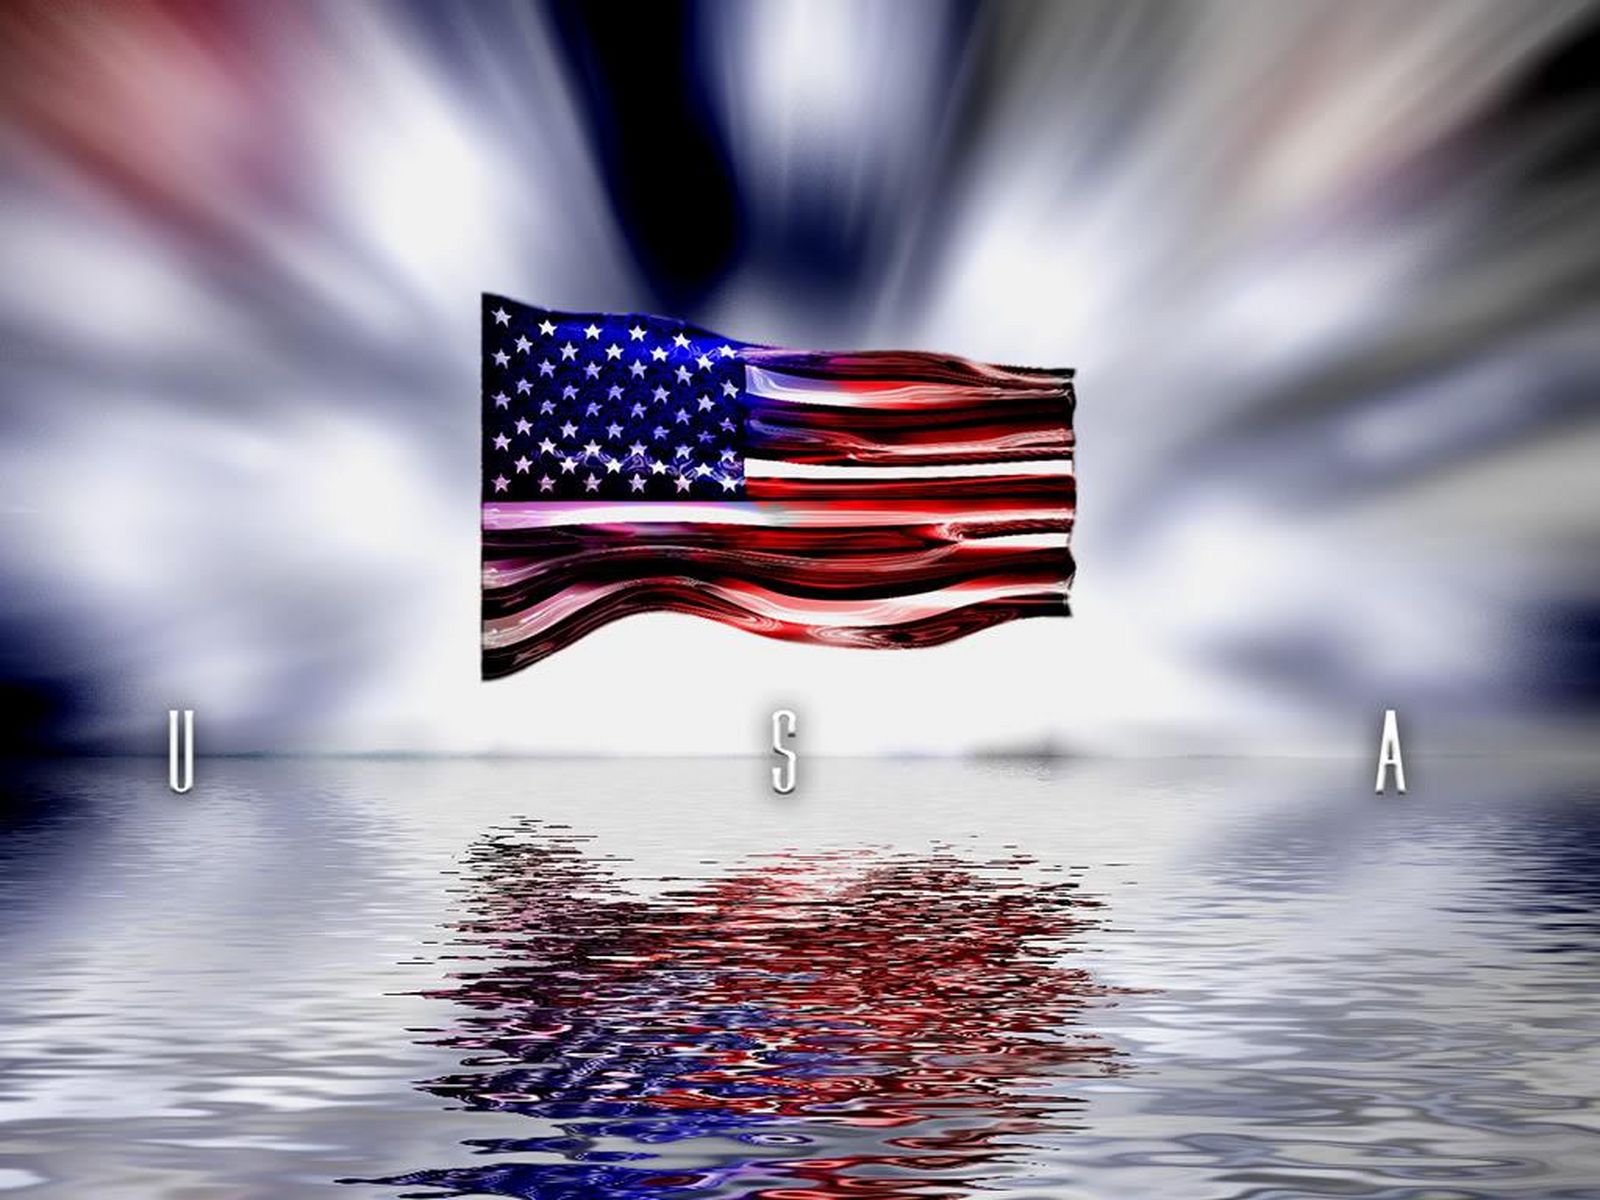 USA United States of America Flag Wallpaper Background Image